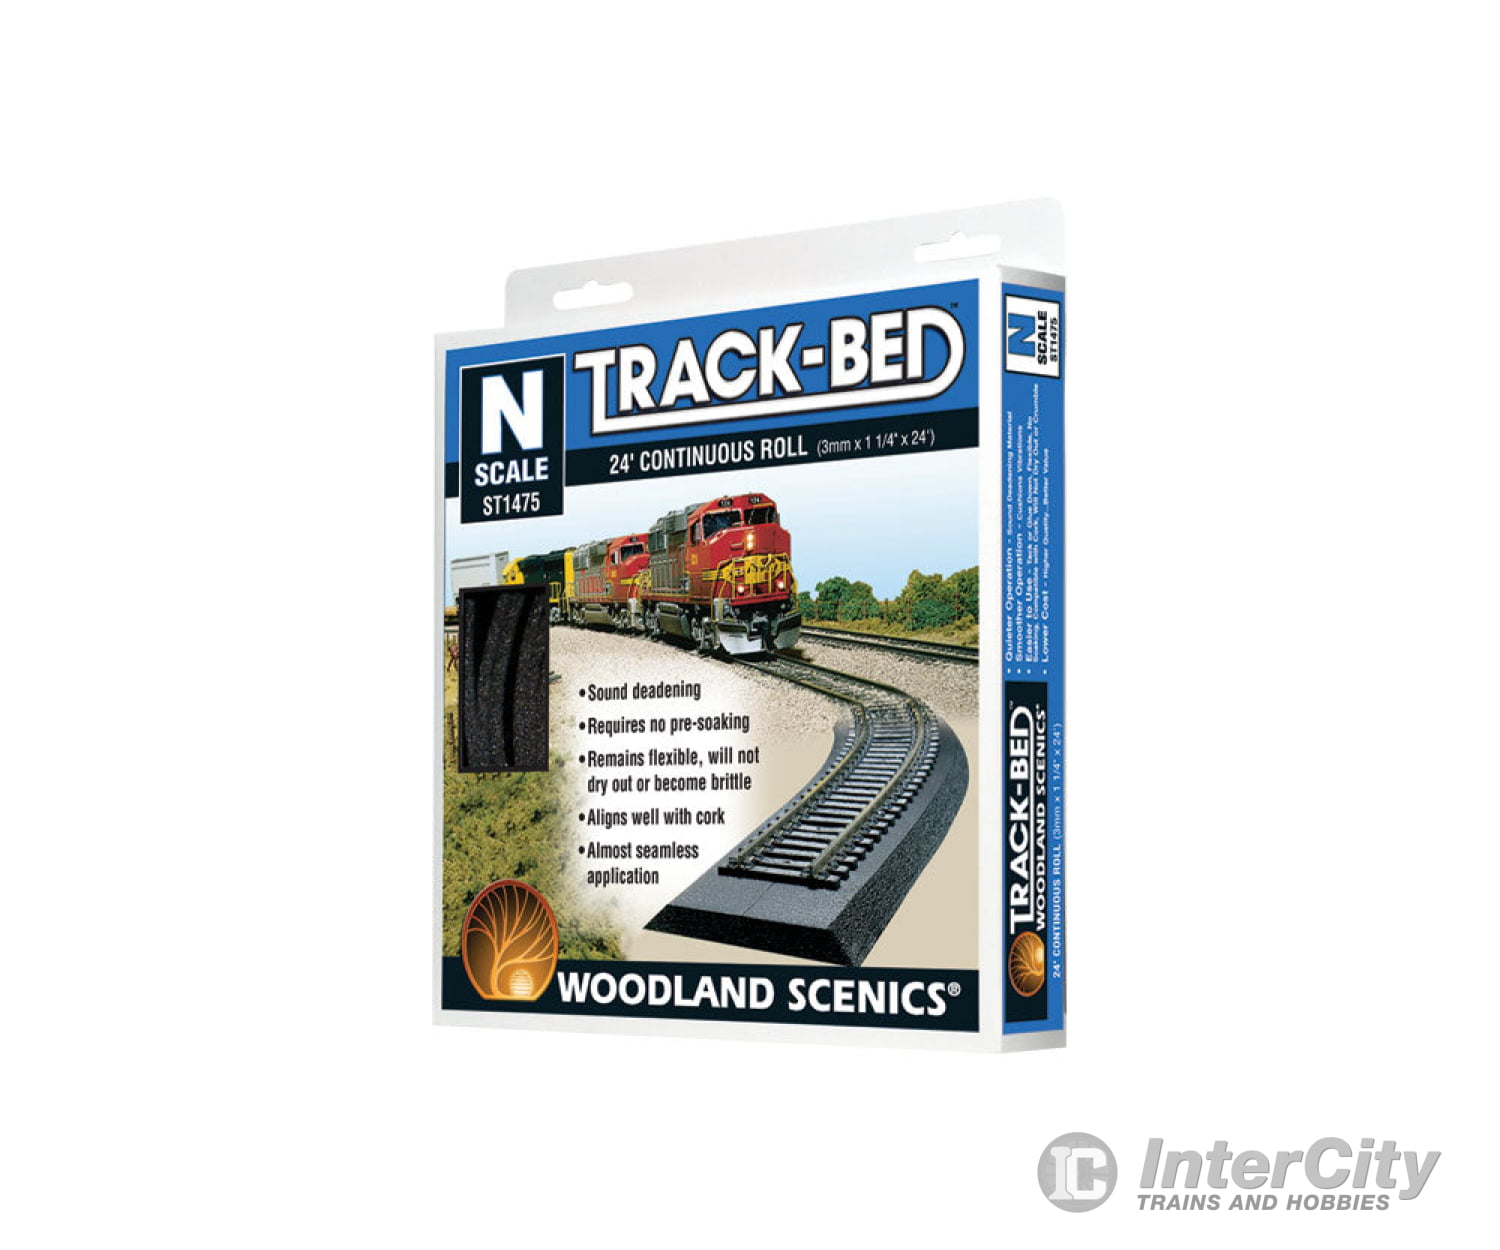 Woodland Scenics 1475 Trackbed - 24’ Roll N Scale Ballast & Roadbed